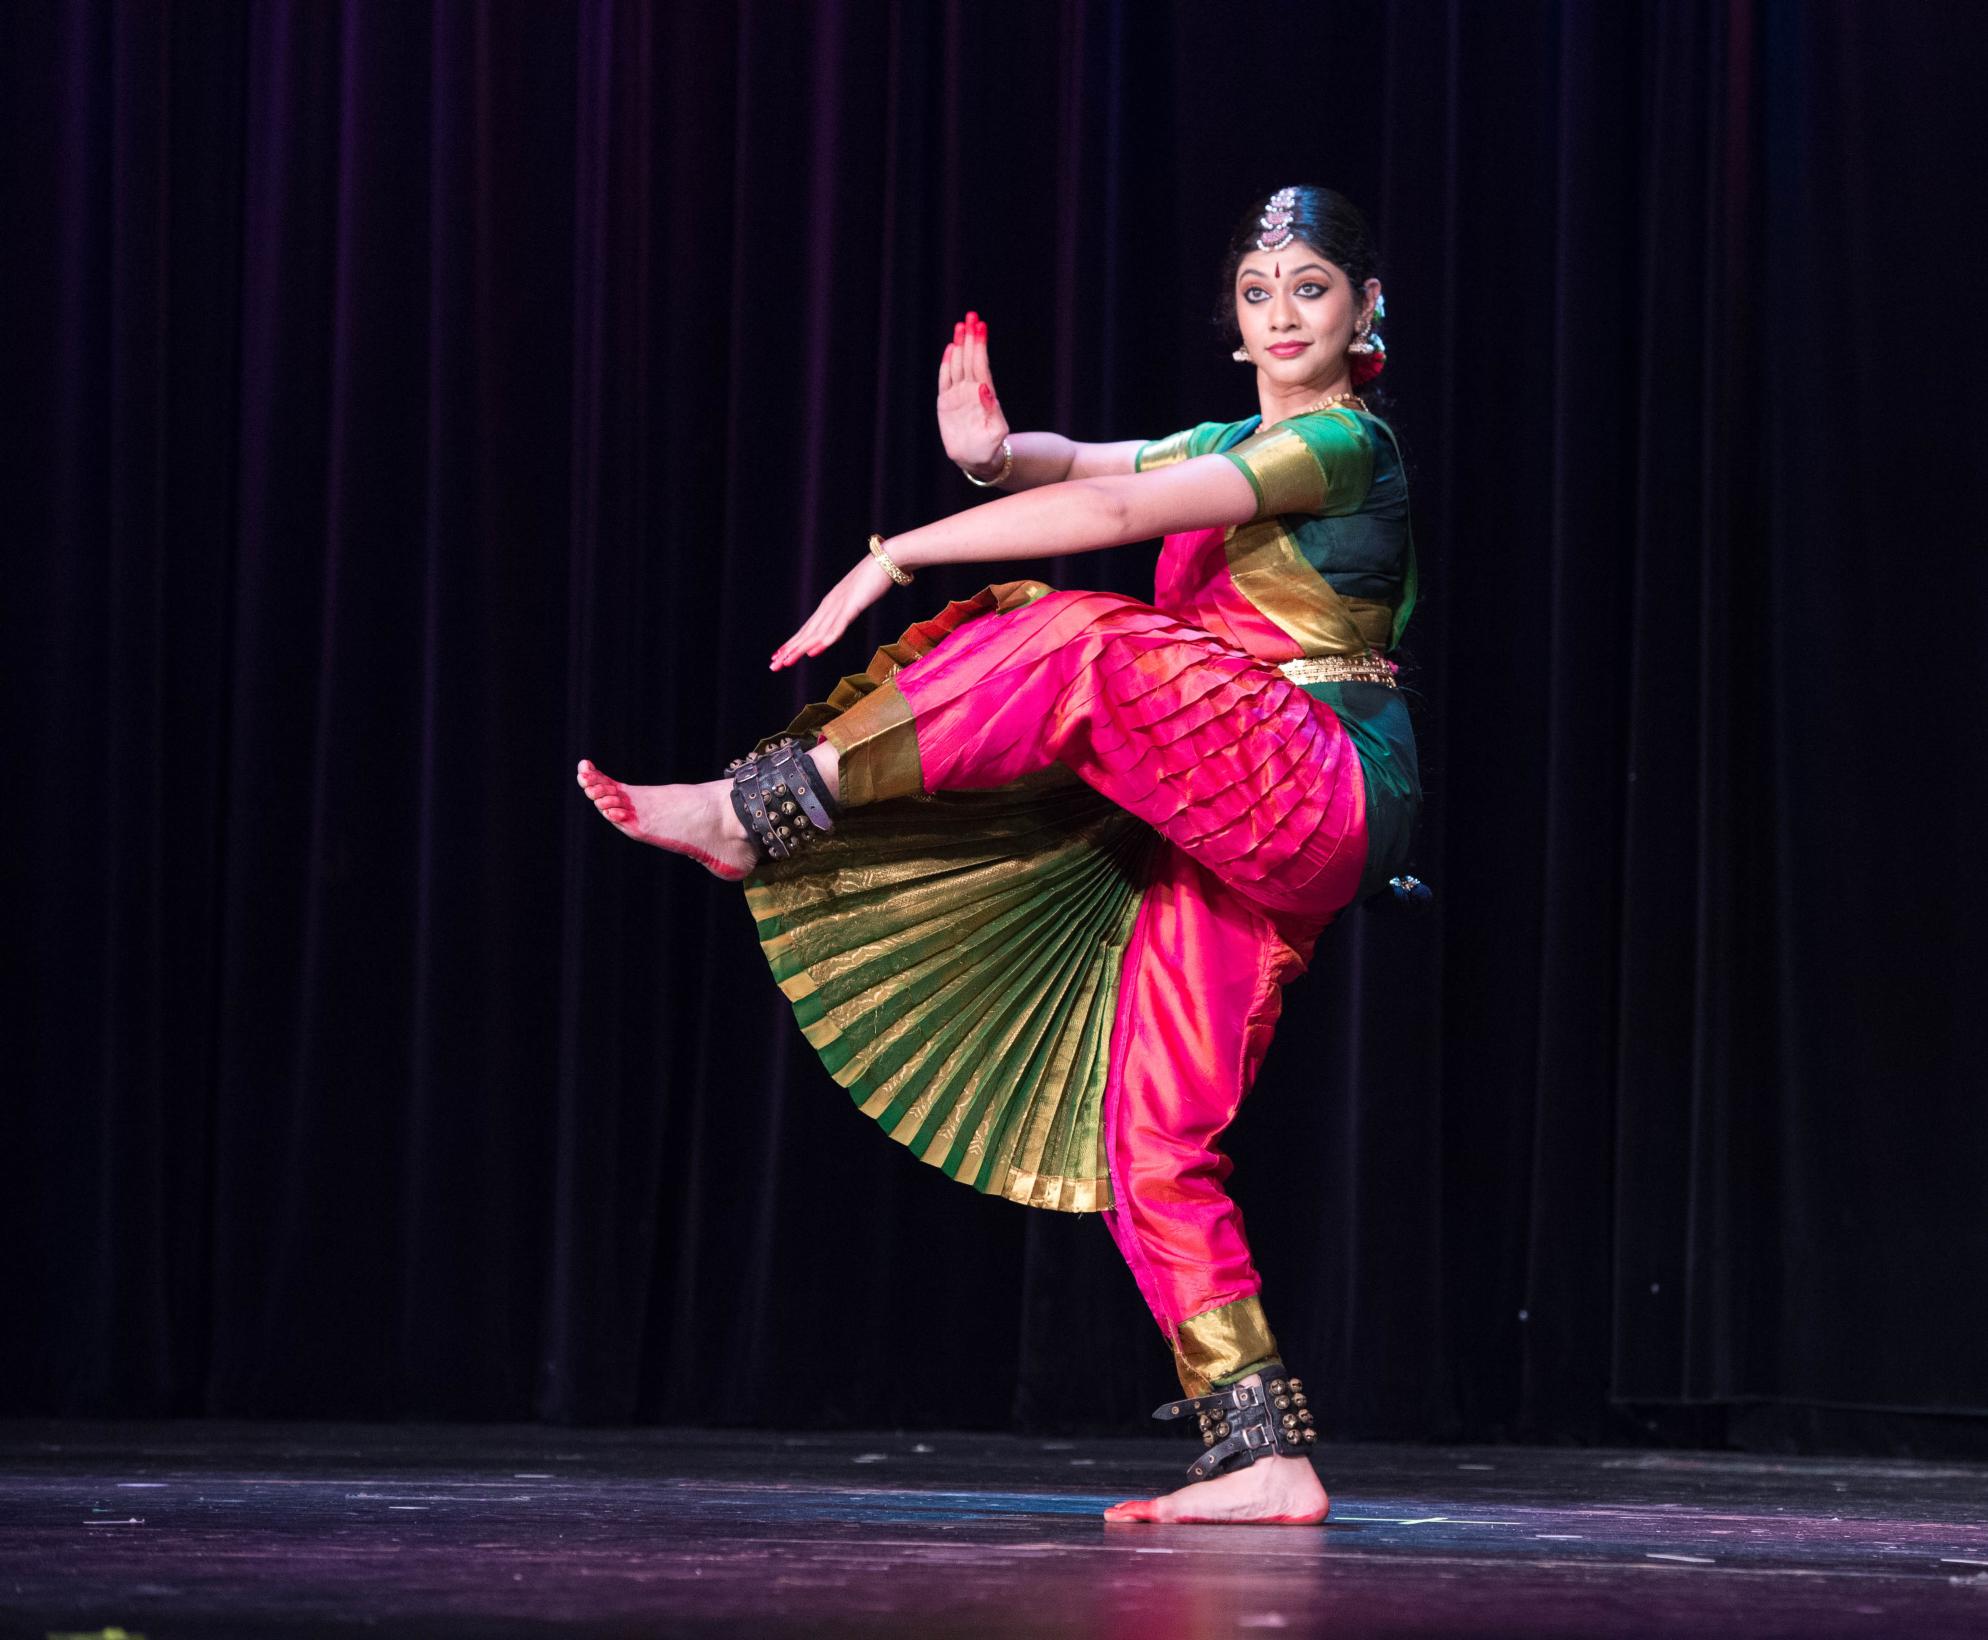 Shiva and Parvati unite in dance | Latest News | The Hindu